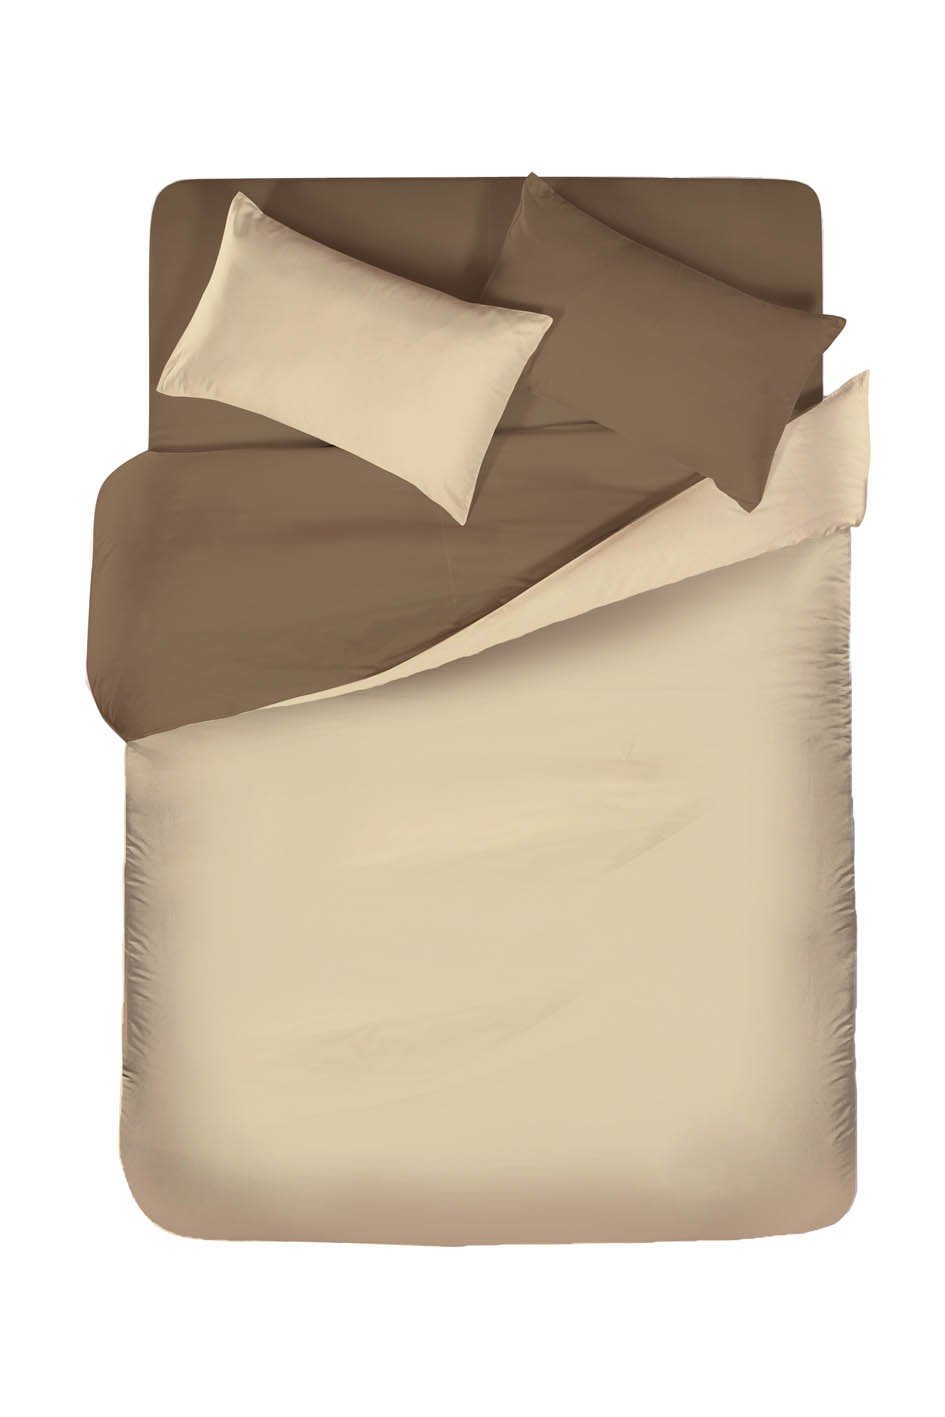 Daphne Luxury Style Polyester and Cotton Sheet Set 6876 Jacquard Bedding Set image1